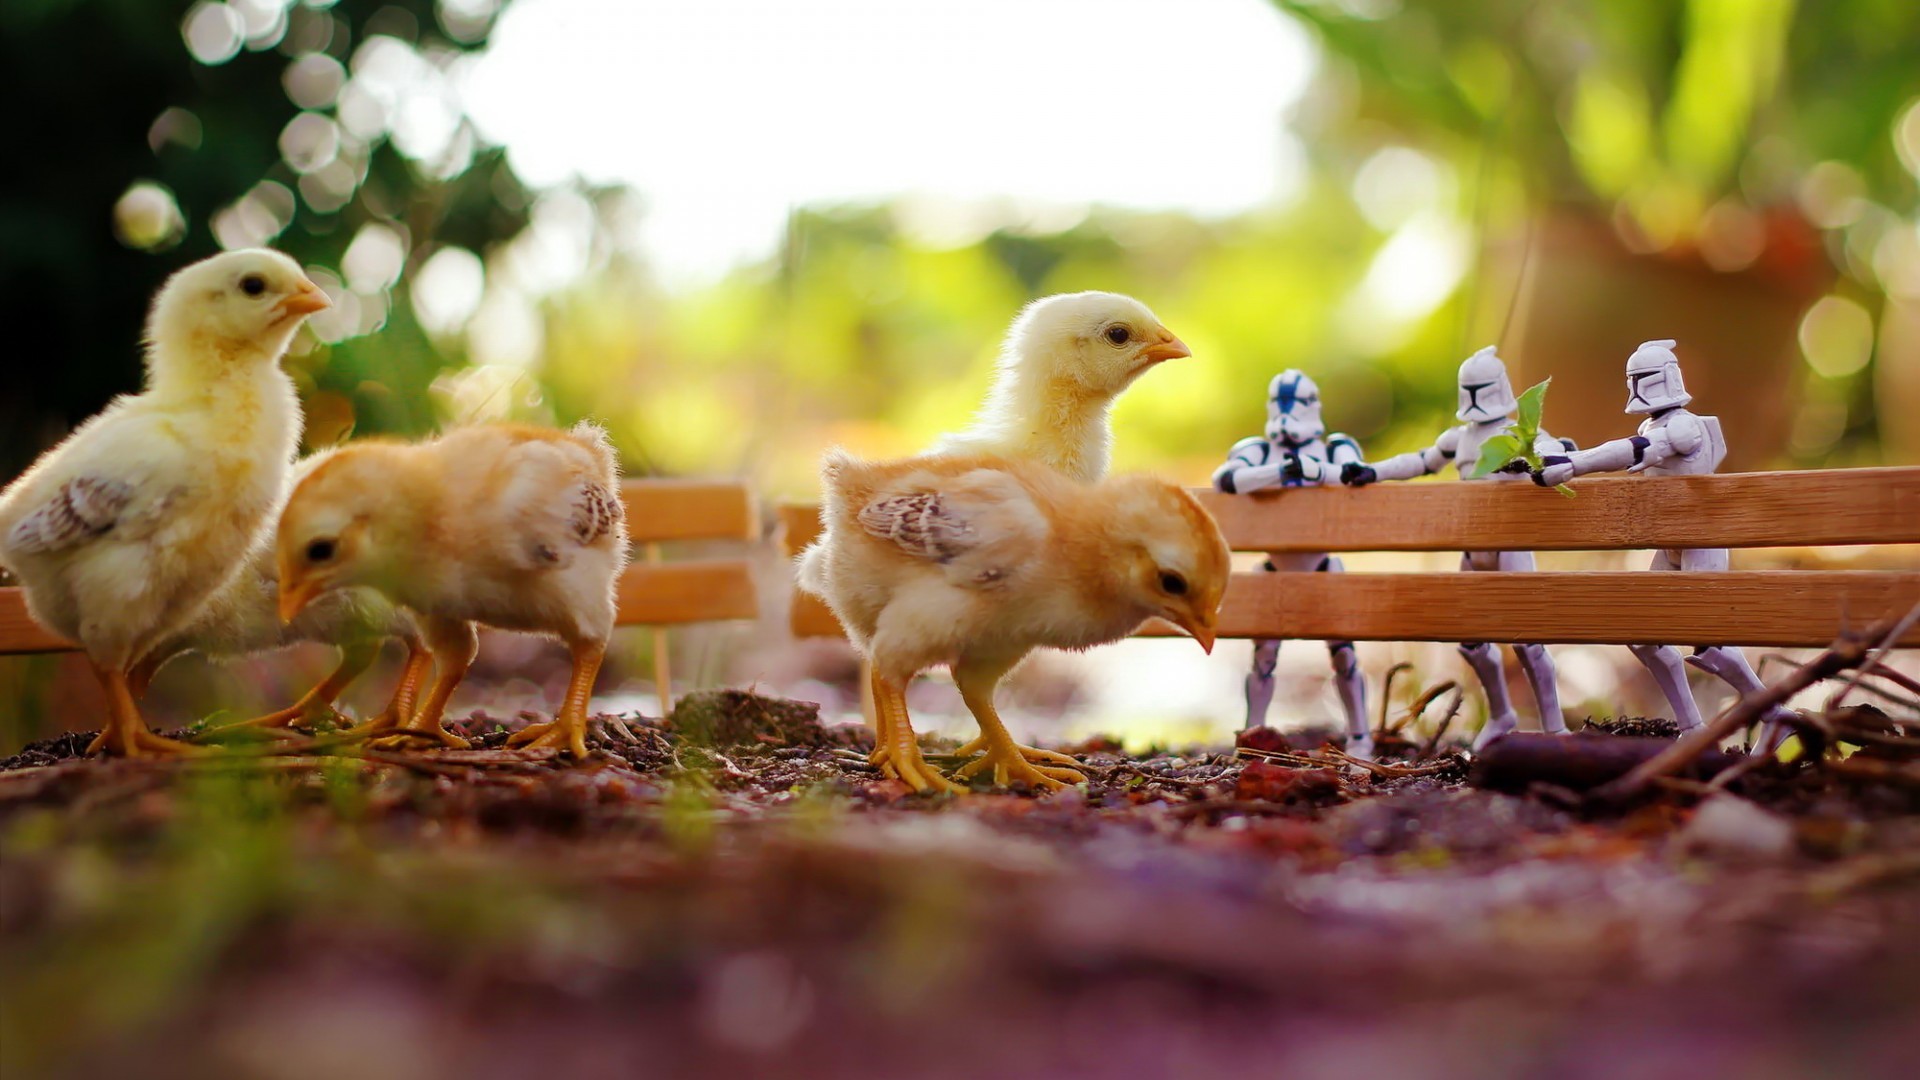 General 1920x1080 chickens birds stormtrooper fence toys bokeh humor Star Wars animals outdoors Star Wars Humor